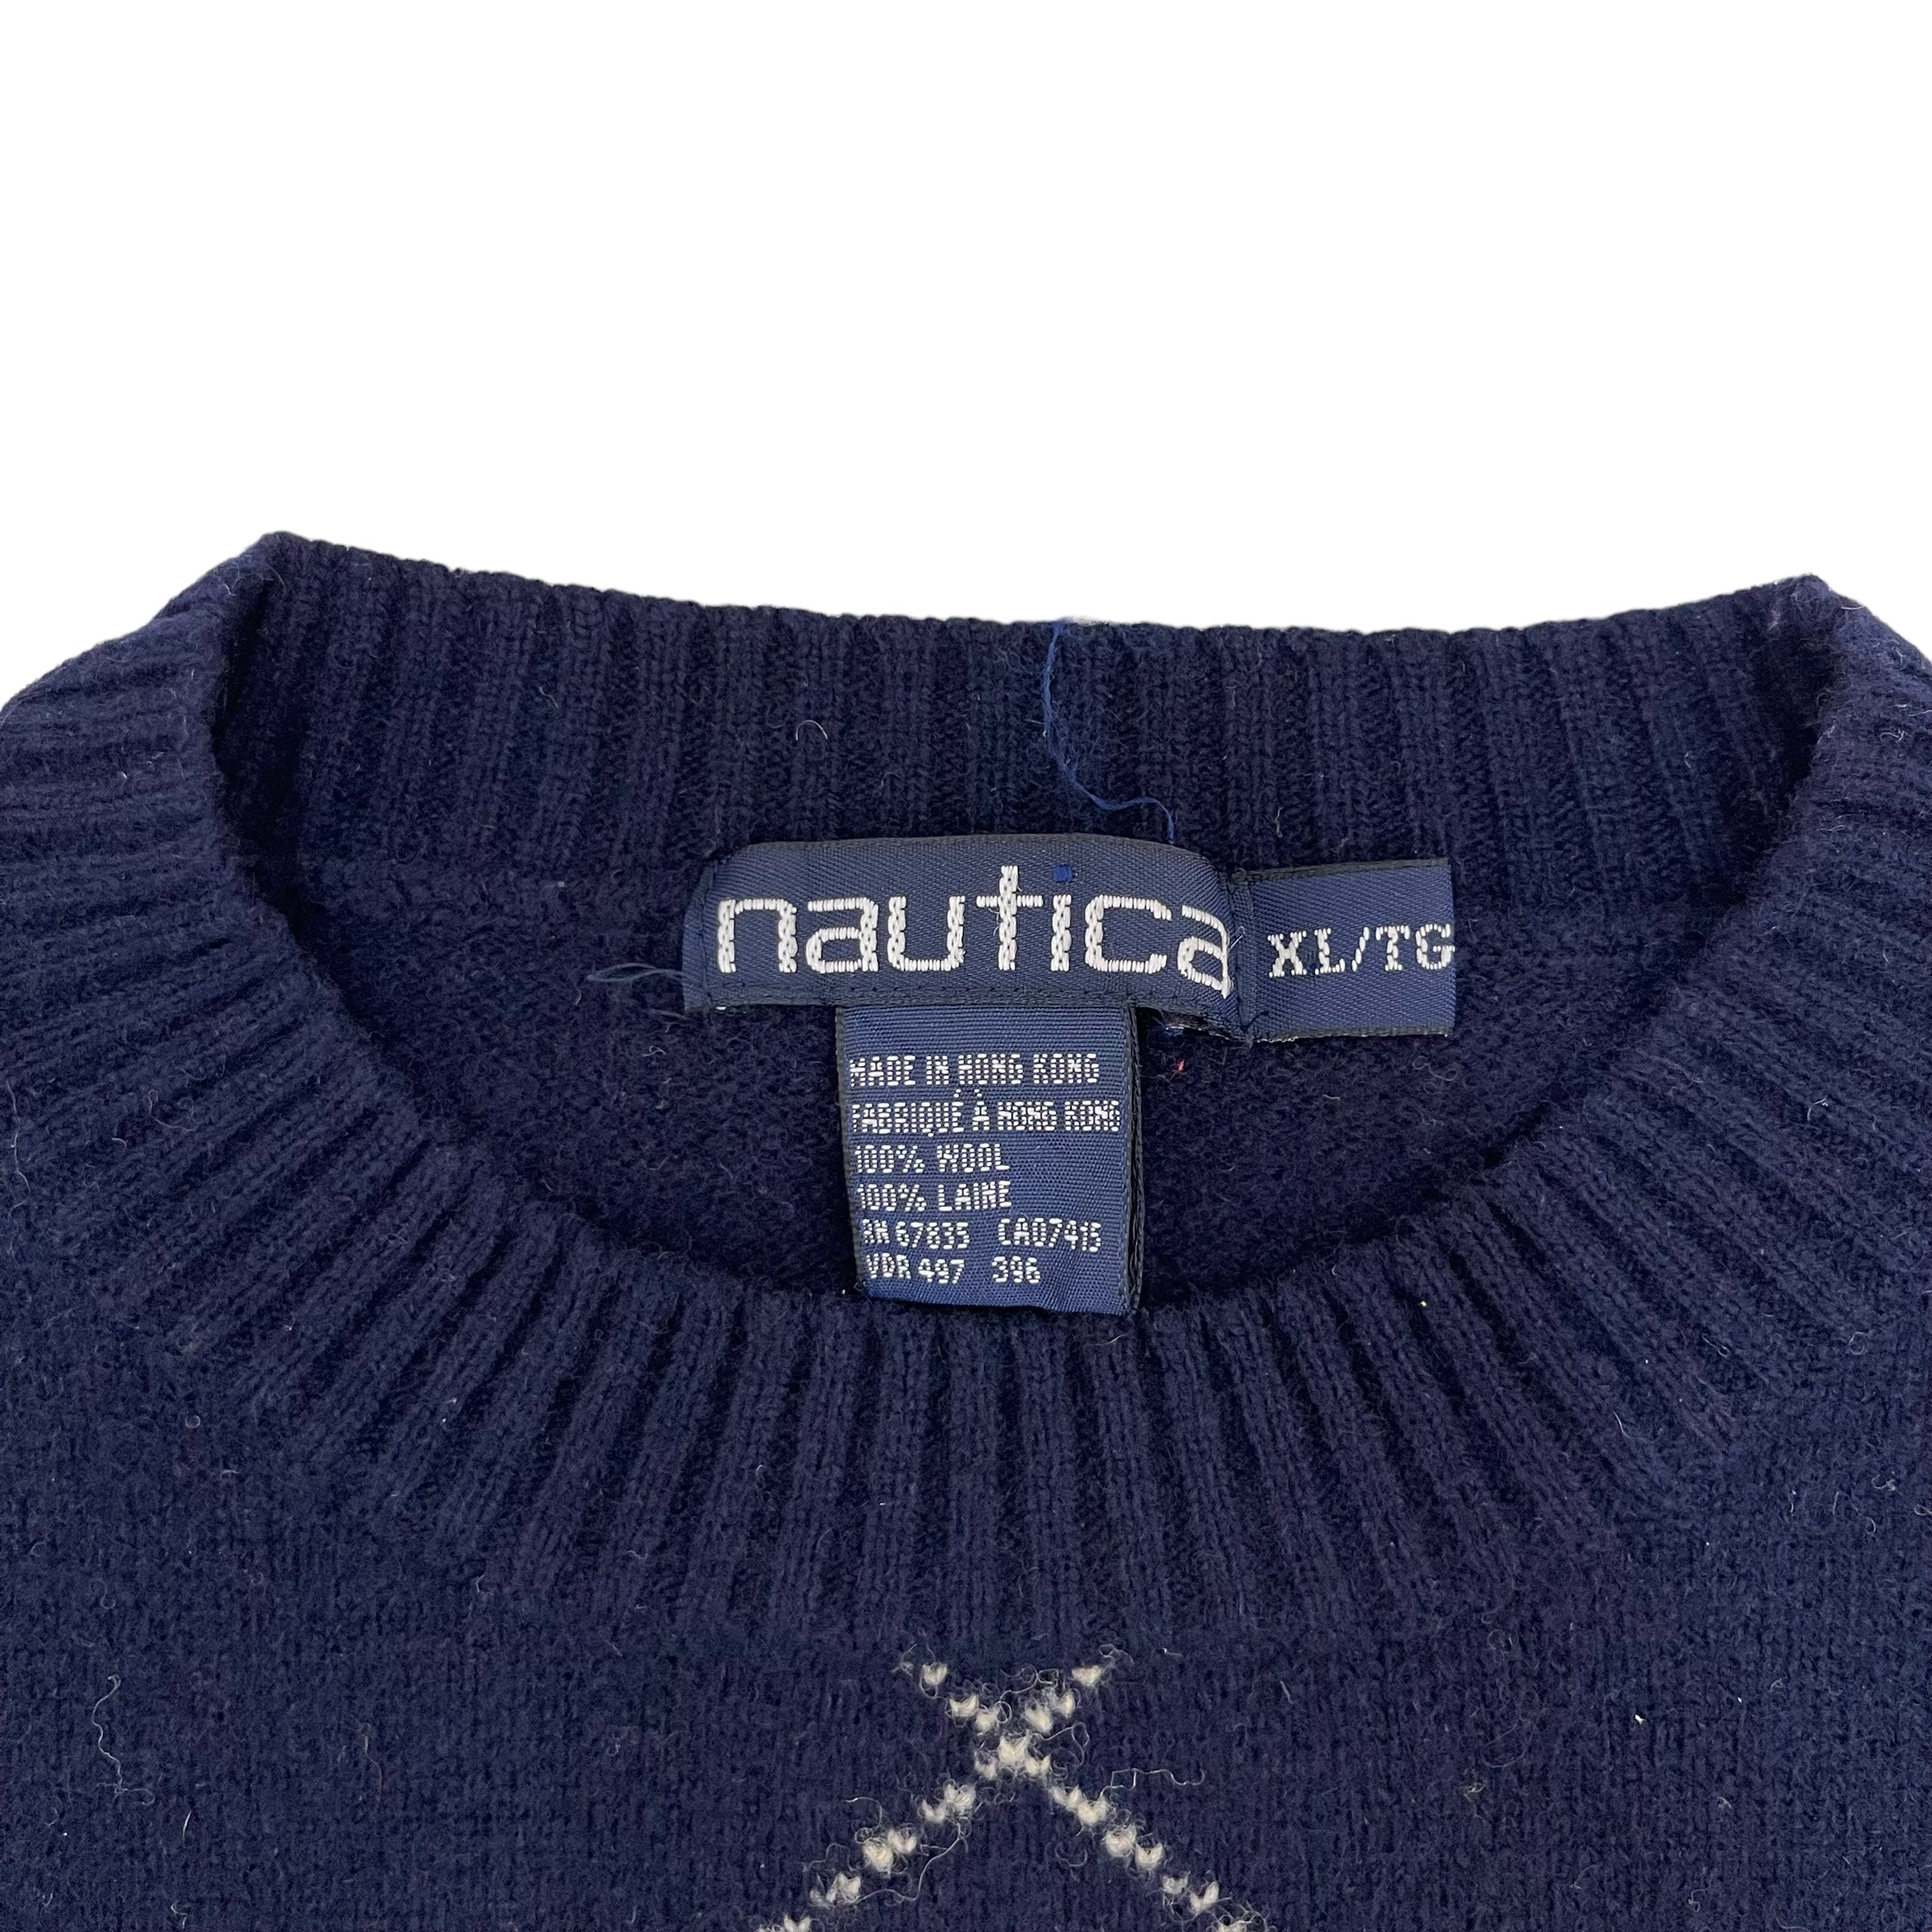 GC178 nautica ニット セーター プルオーバー ウール100% ネイビー×カーキ×赤茶×ベージュ×ブラウン メンズ サイズXL